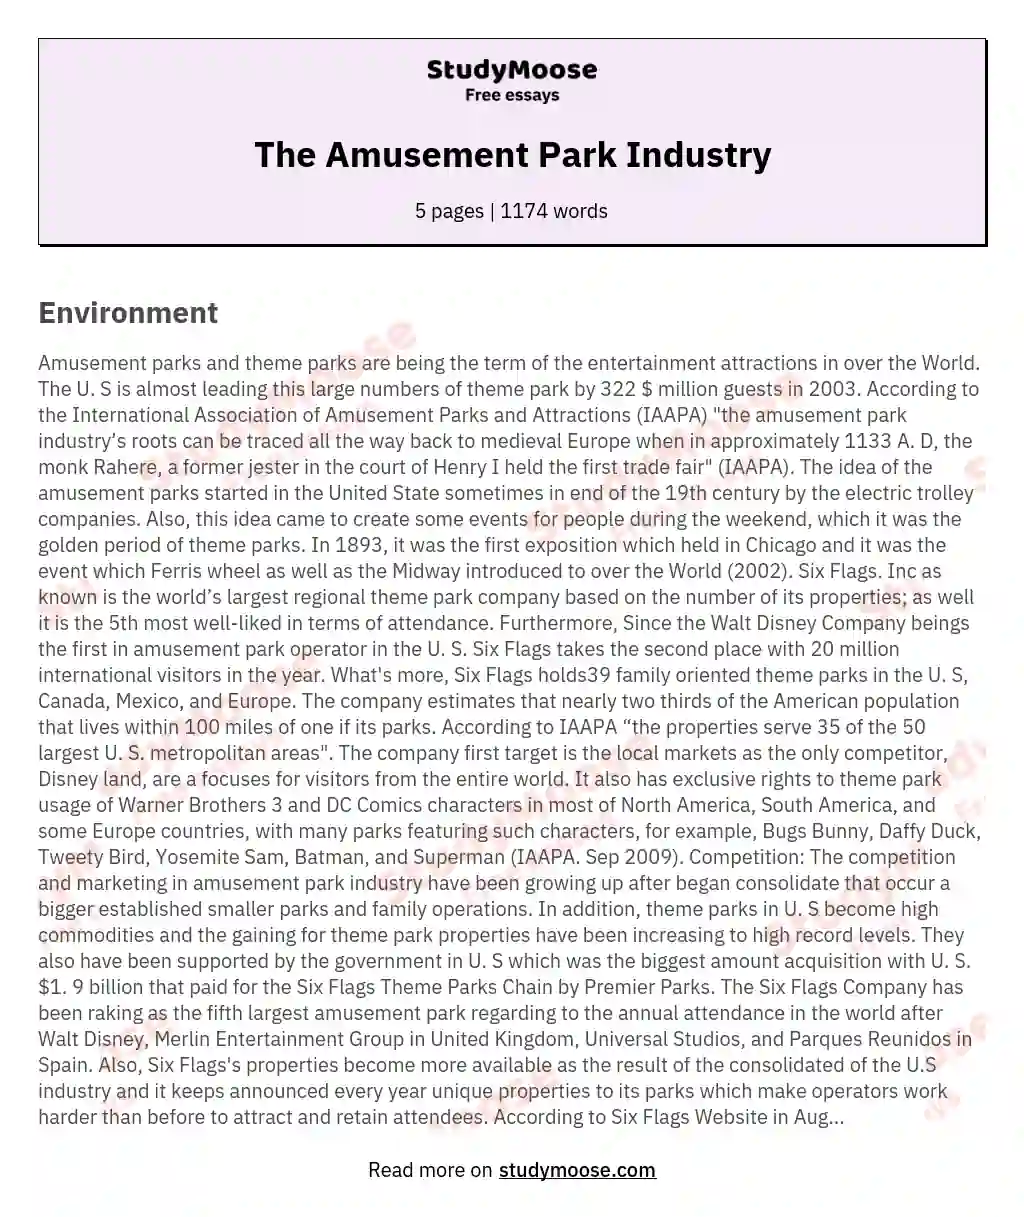 The Amusement Park Industry essay